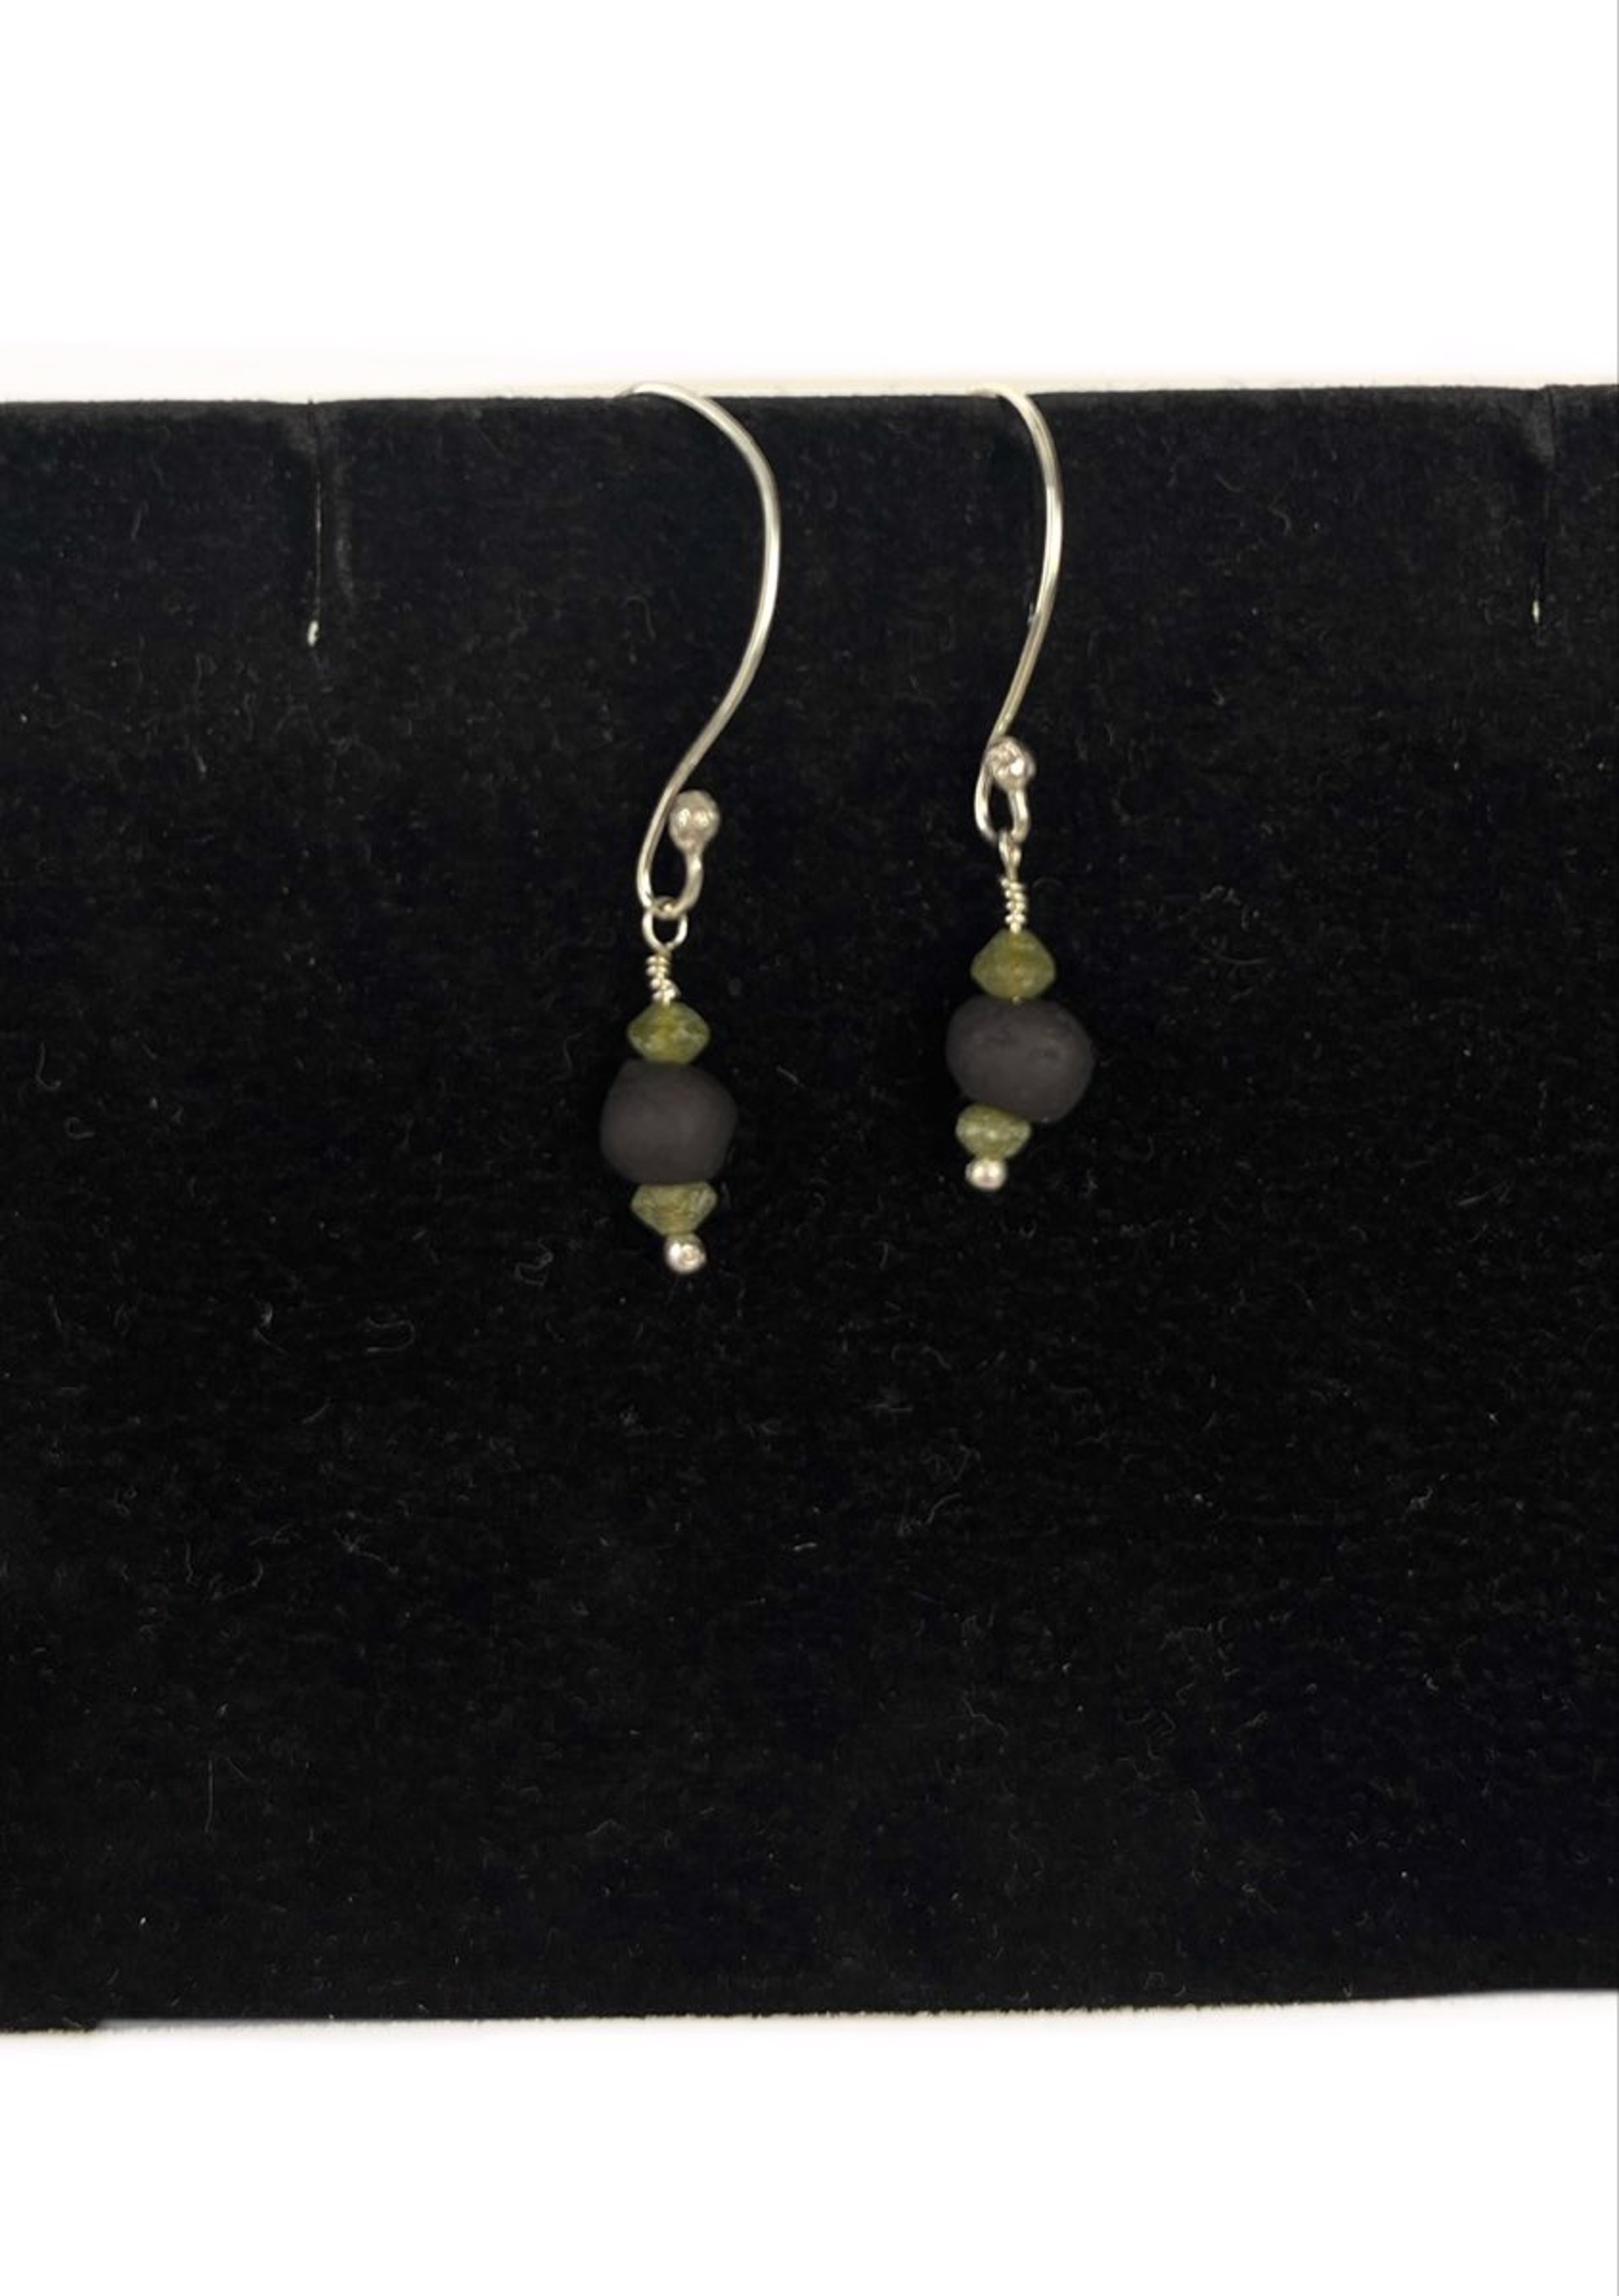 Black and Jade Earrings by Mary Lynn Portera